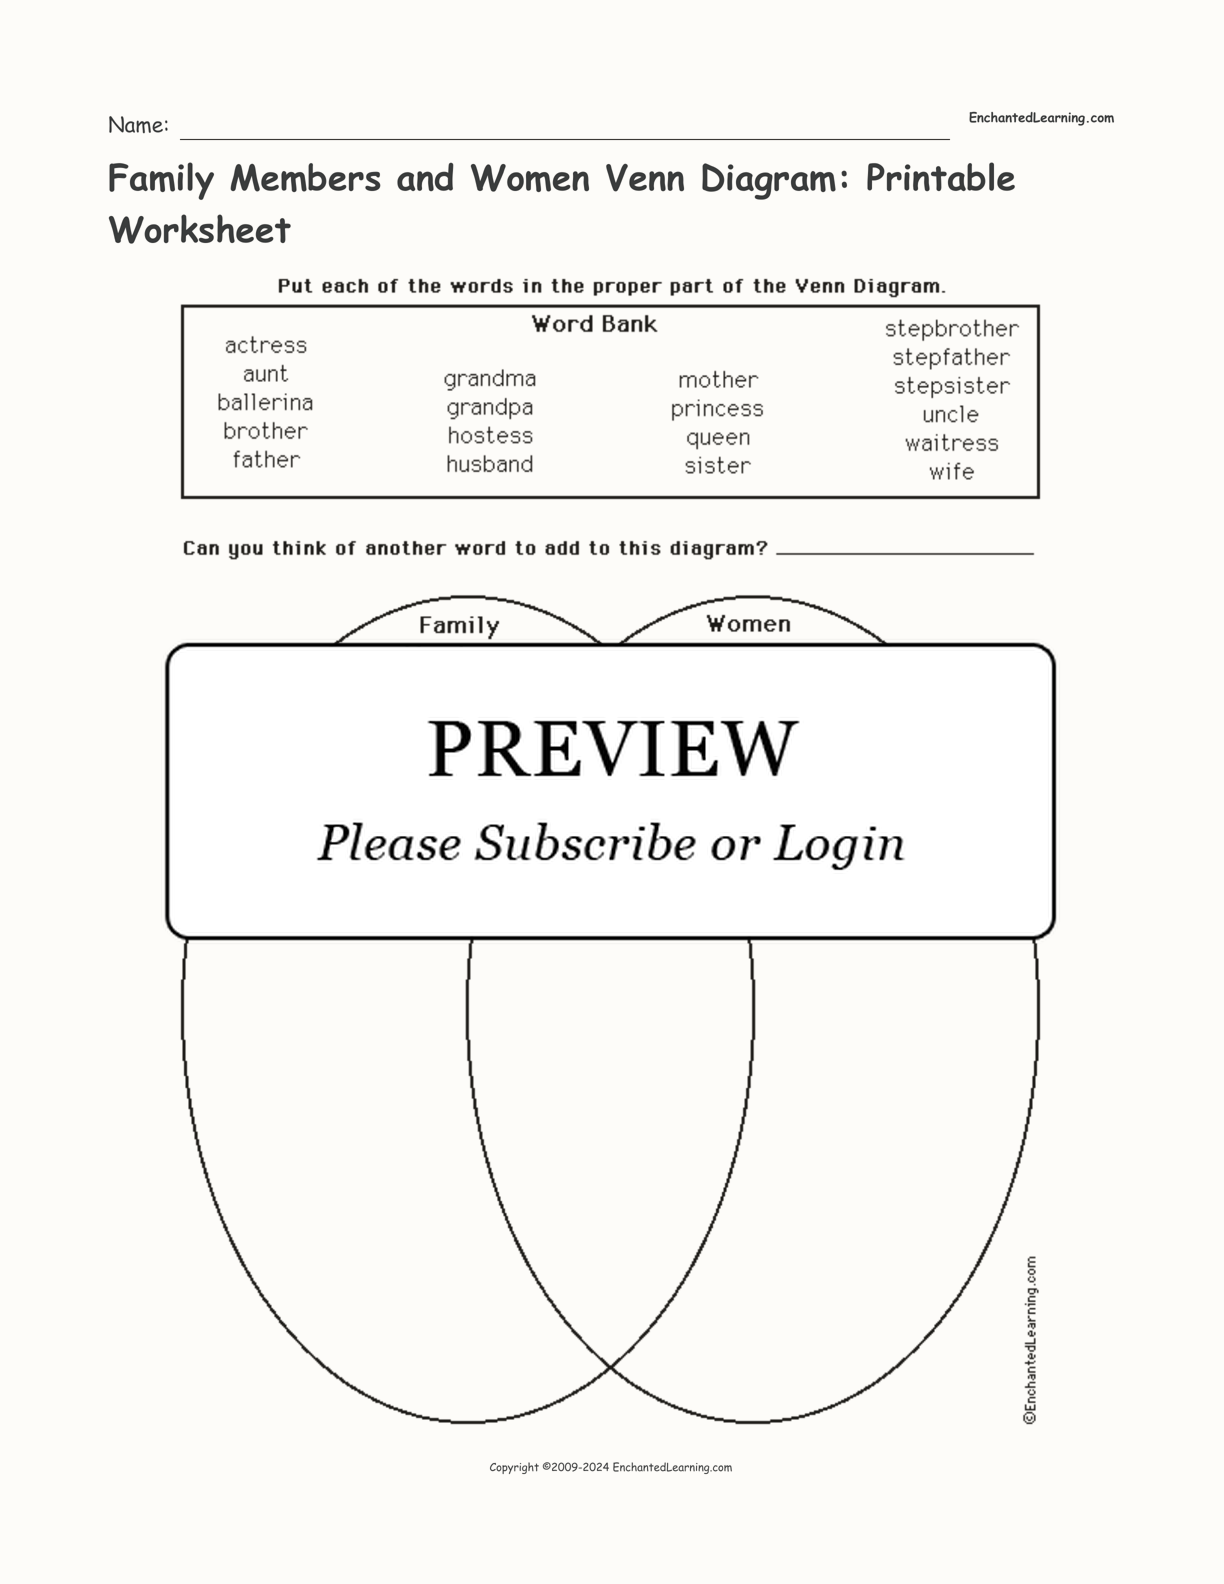 Family Members and Women Venn Diagram: Printable Worksheet interactive worksheet page 1